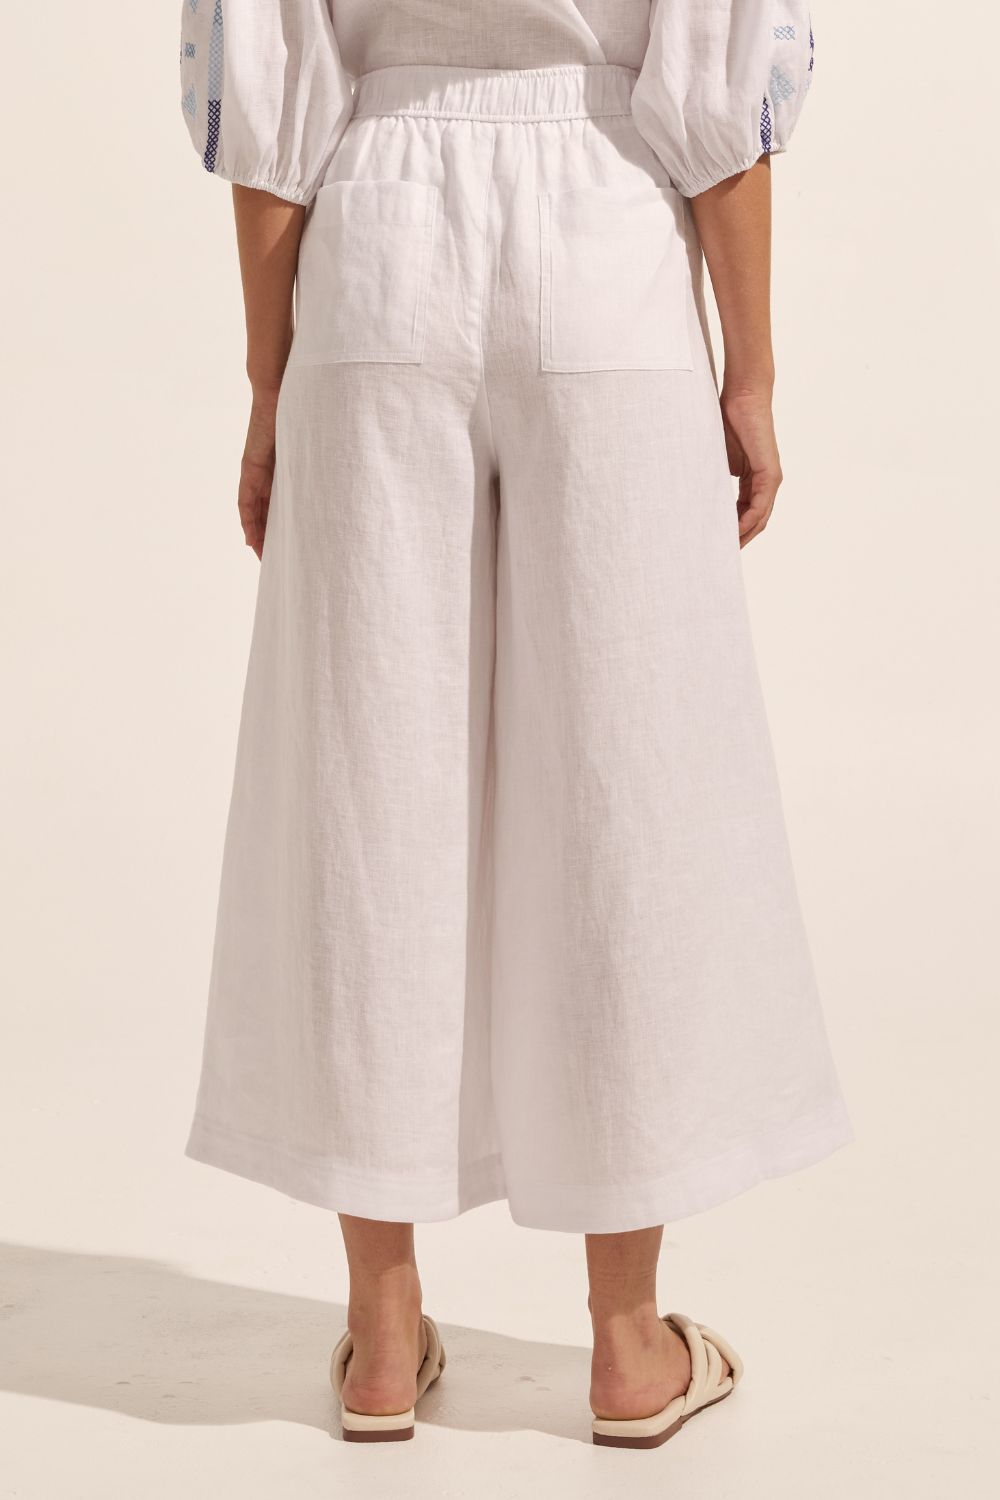 white, pants, elasticated waist, side pockets, wide leg, back image